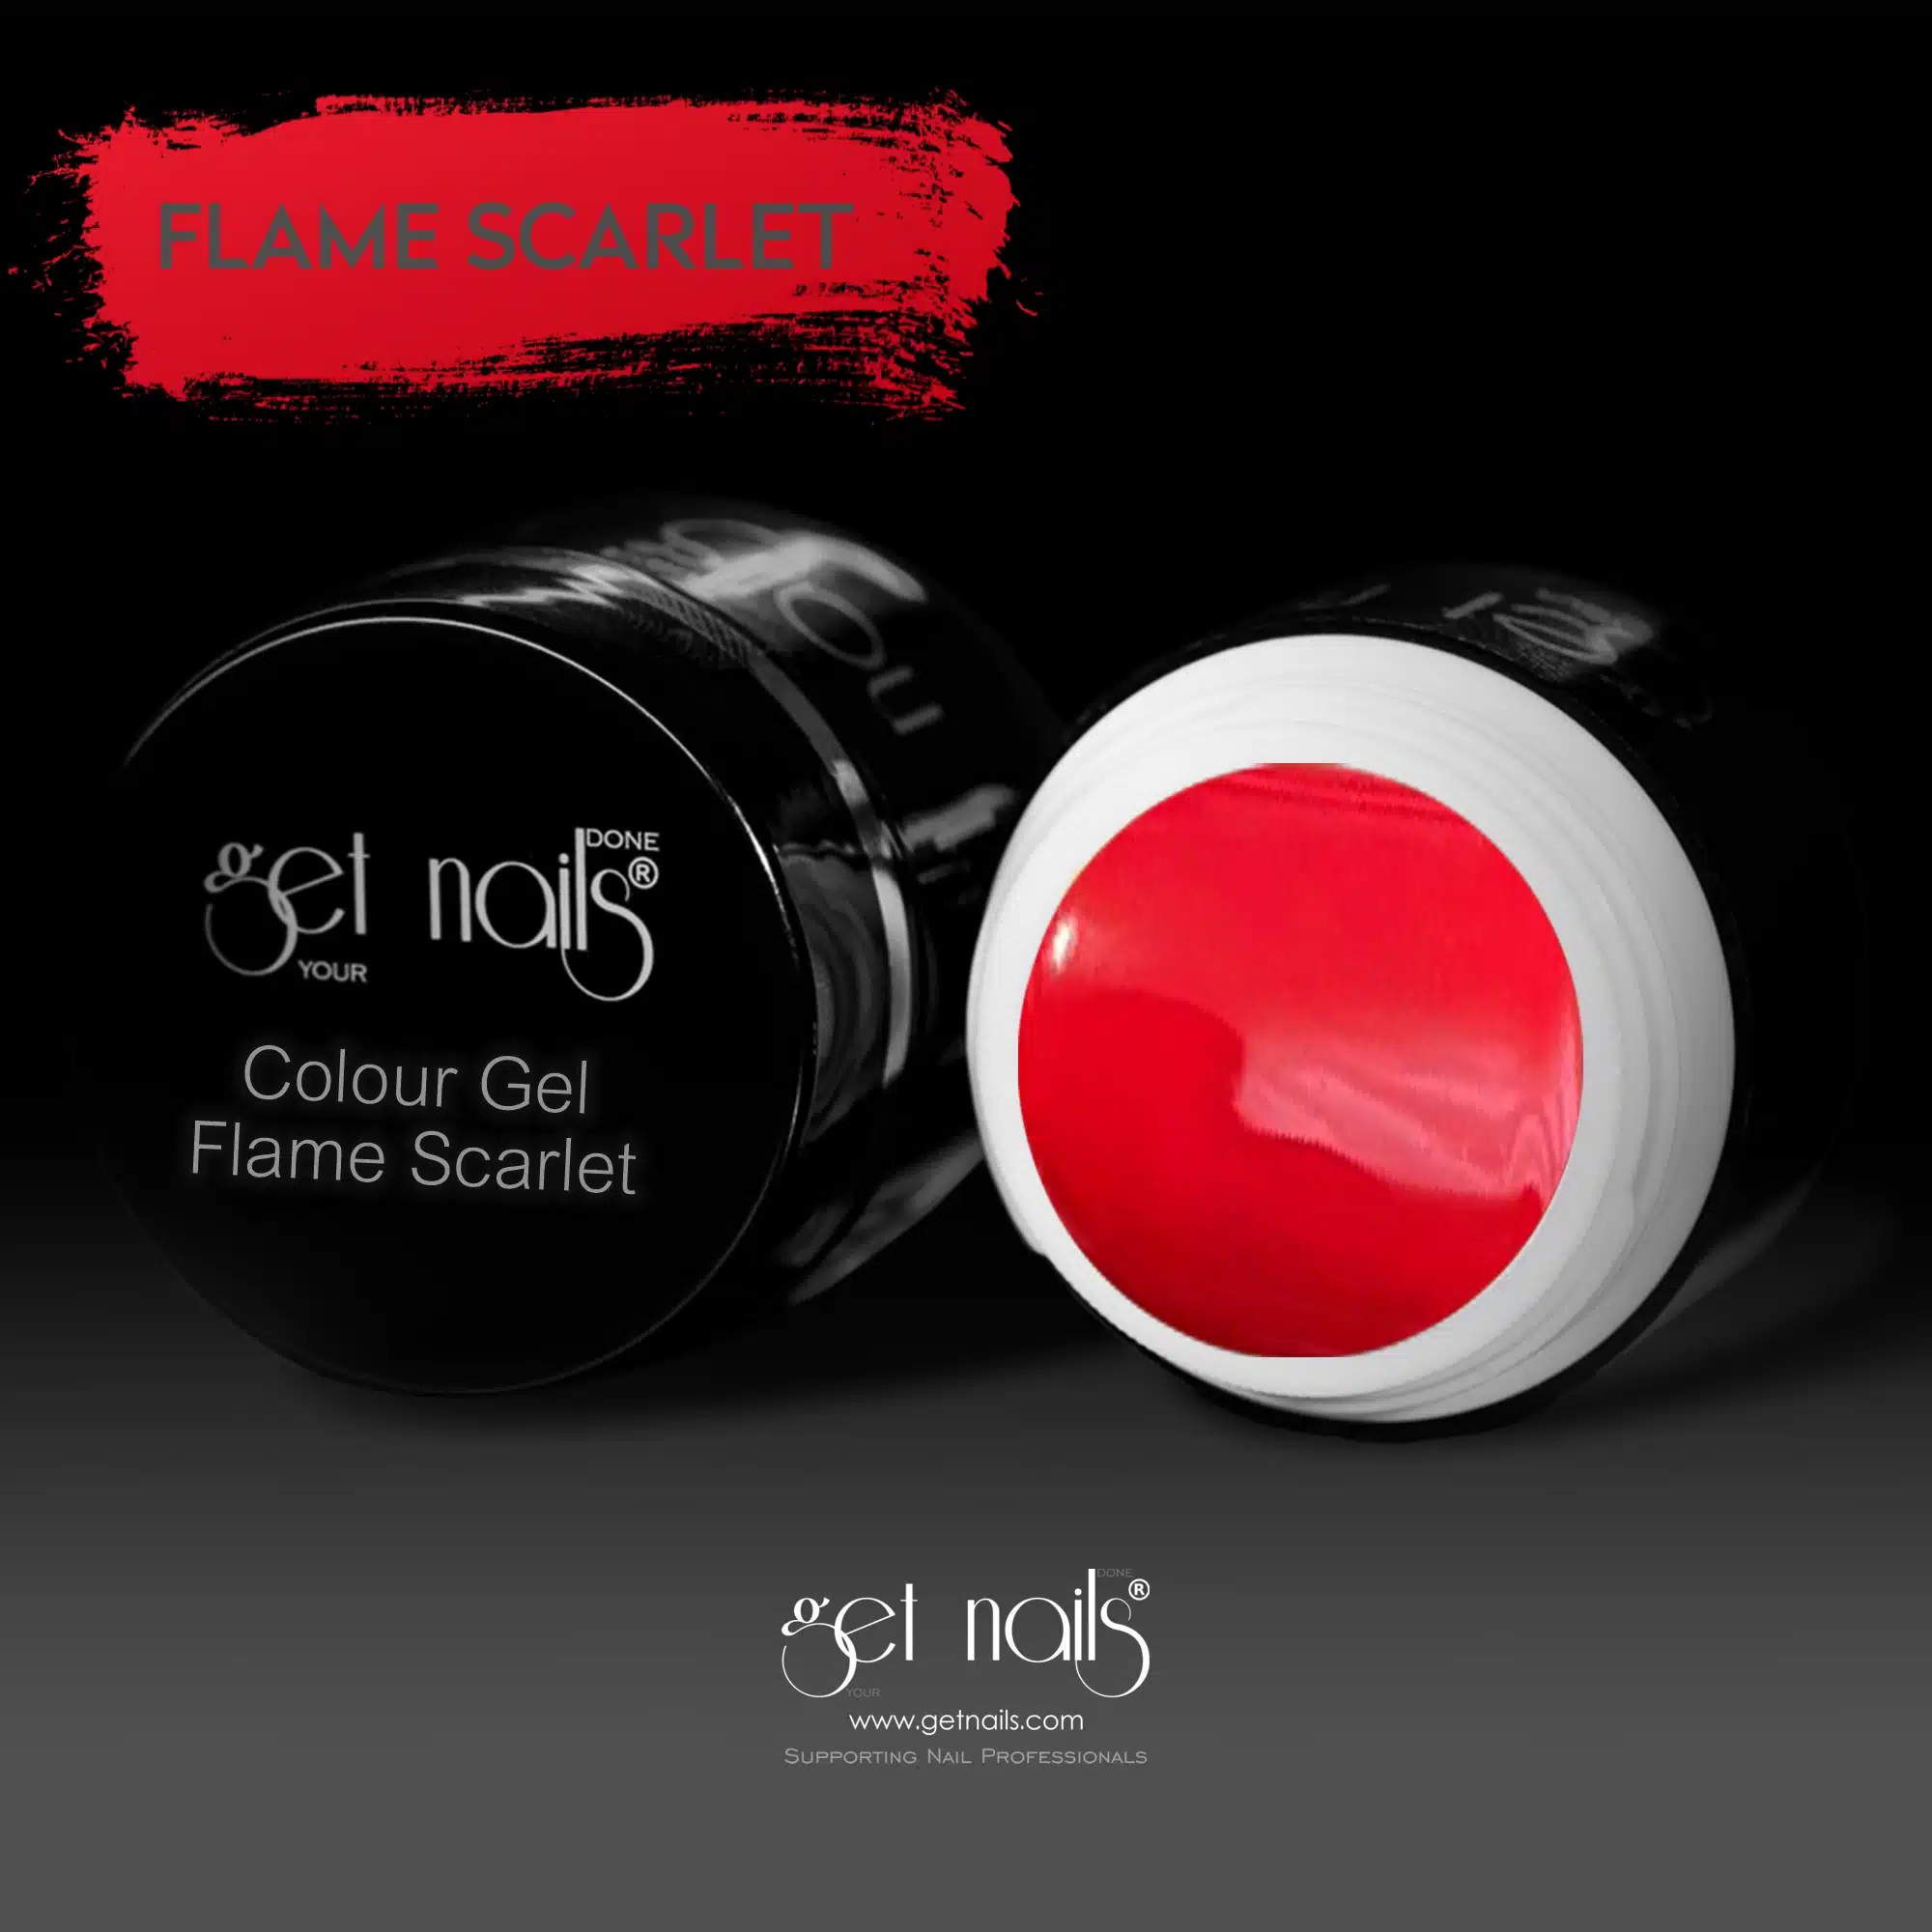 Get Nails Austria - Colour Gel Flame Scarlet 5g